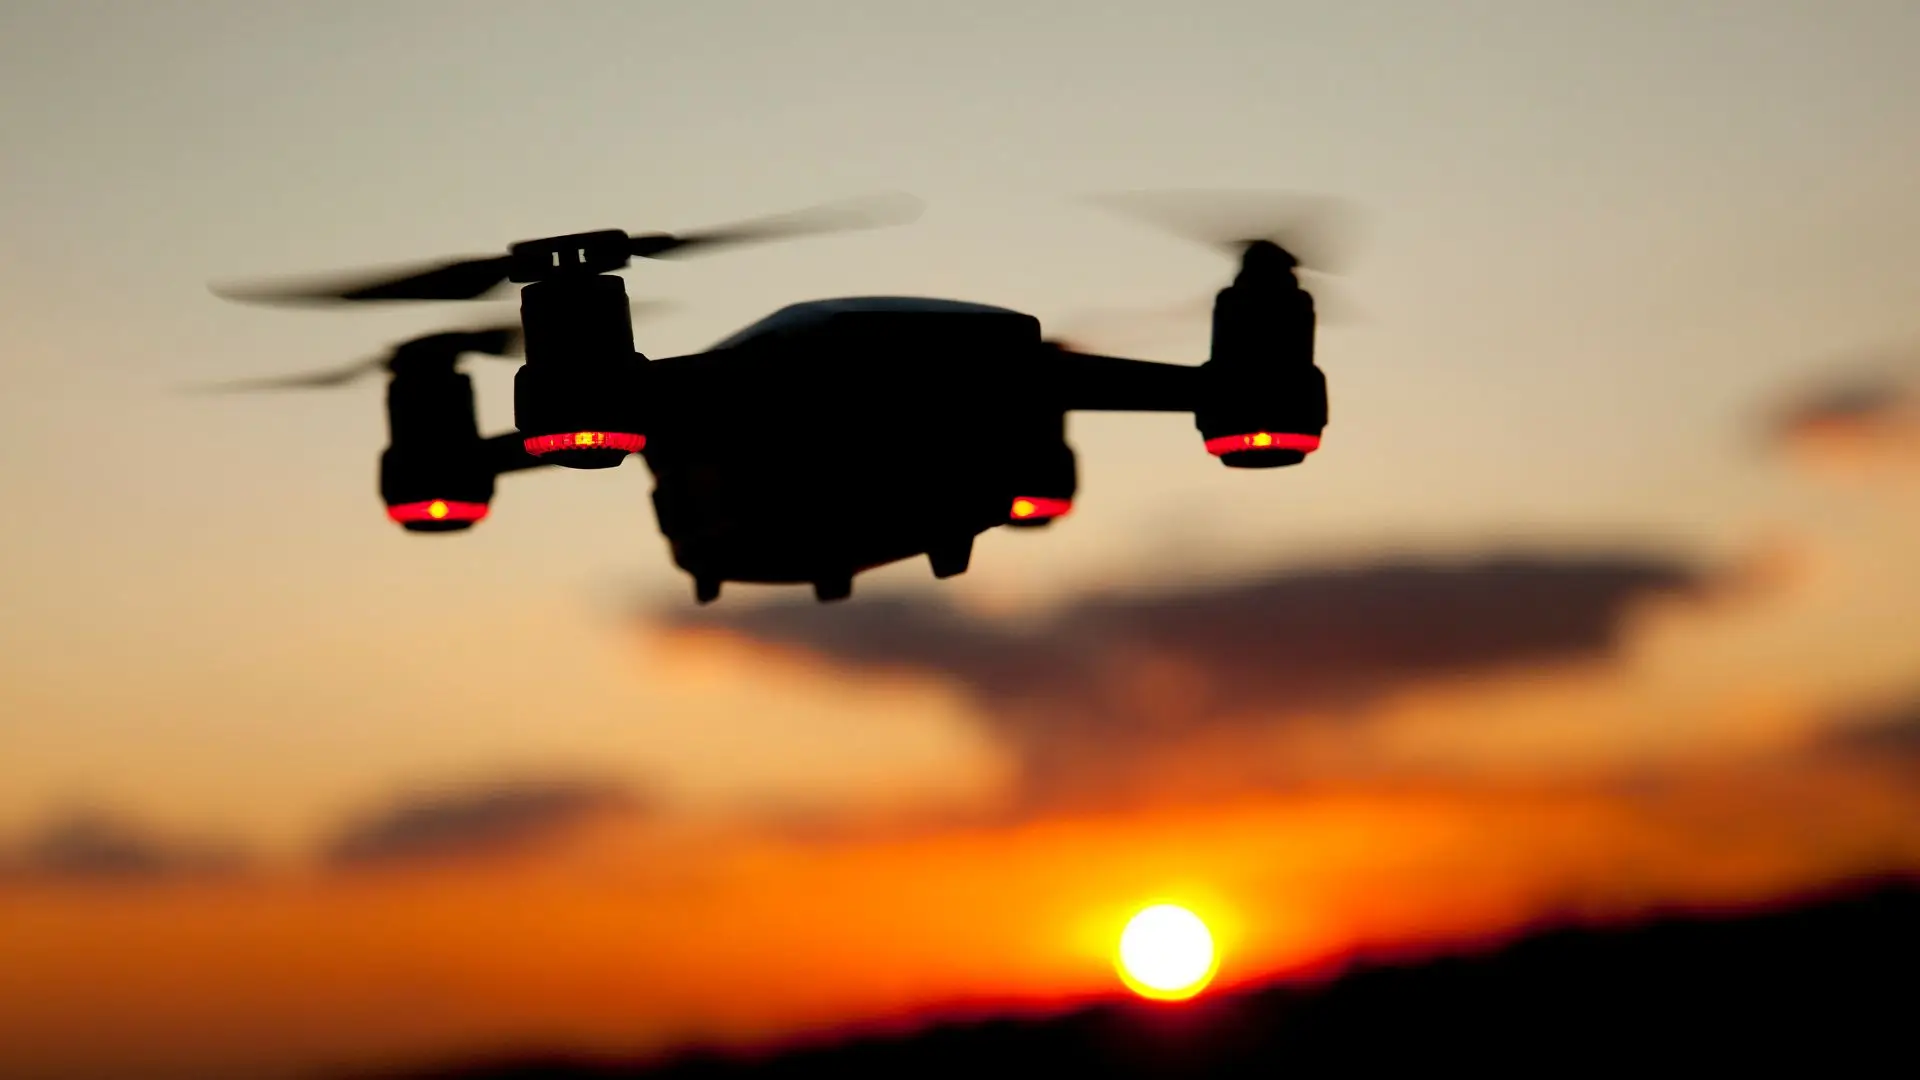 Russo condenado a prisão por sobrevoar Noruega com drone